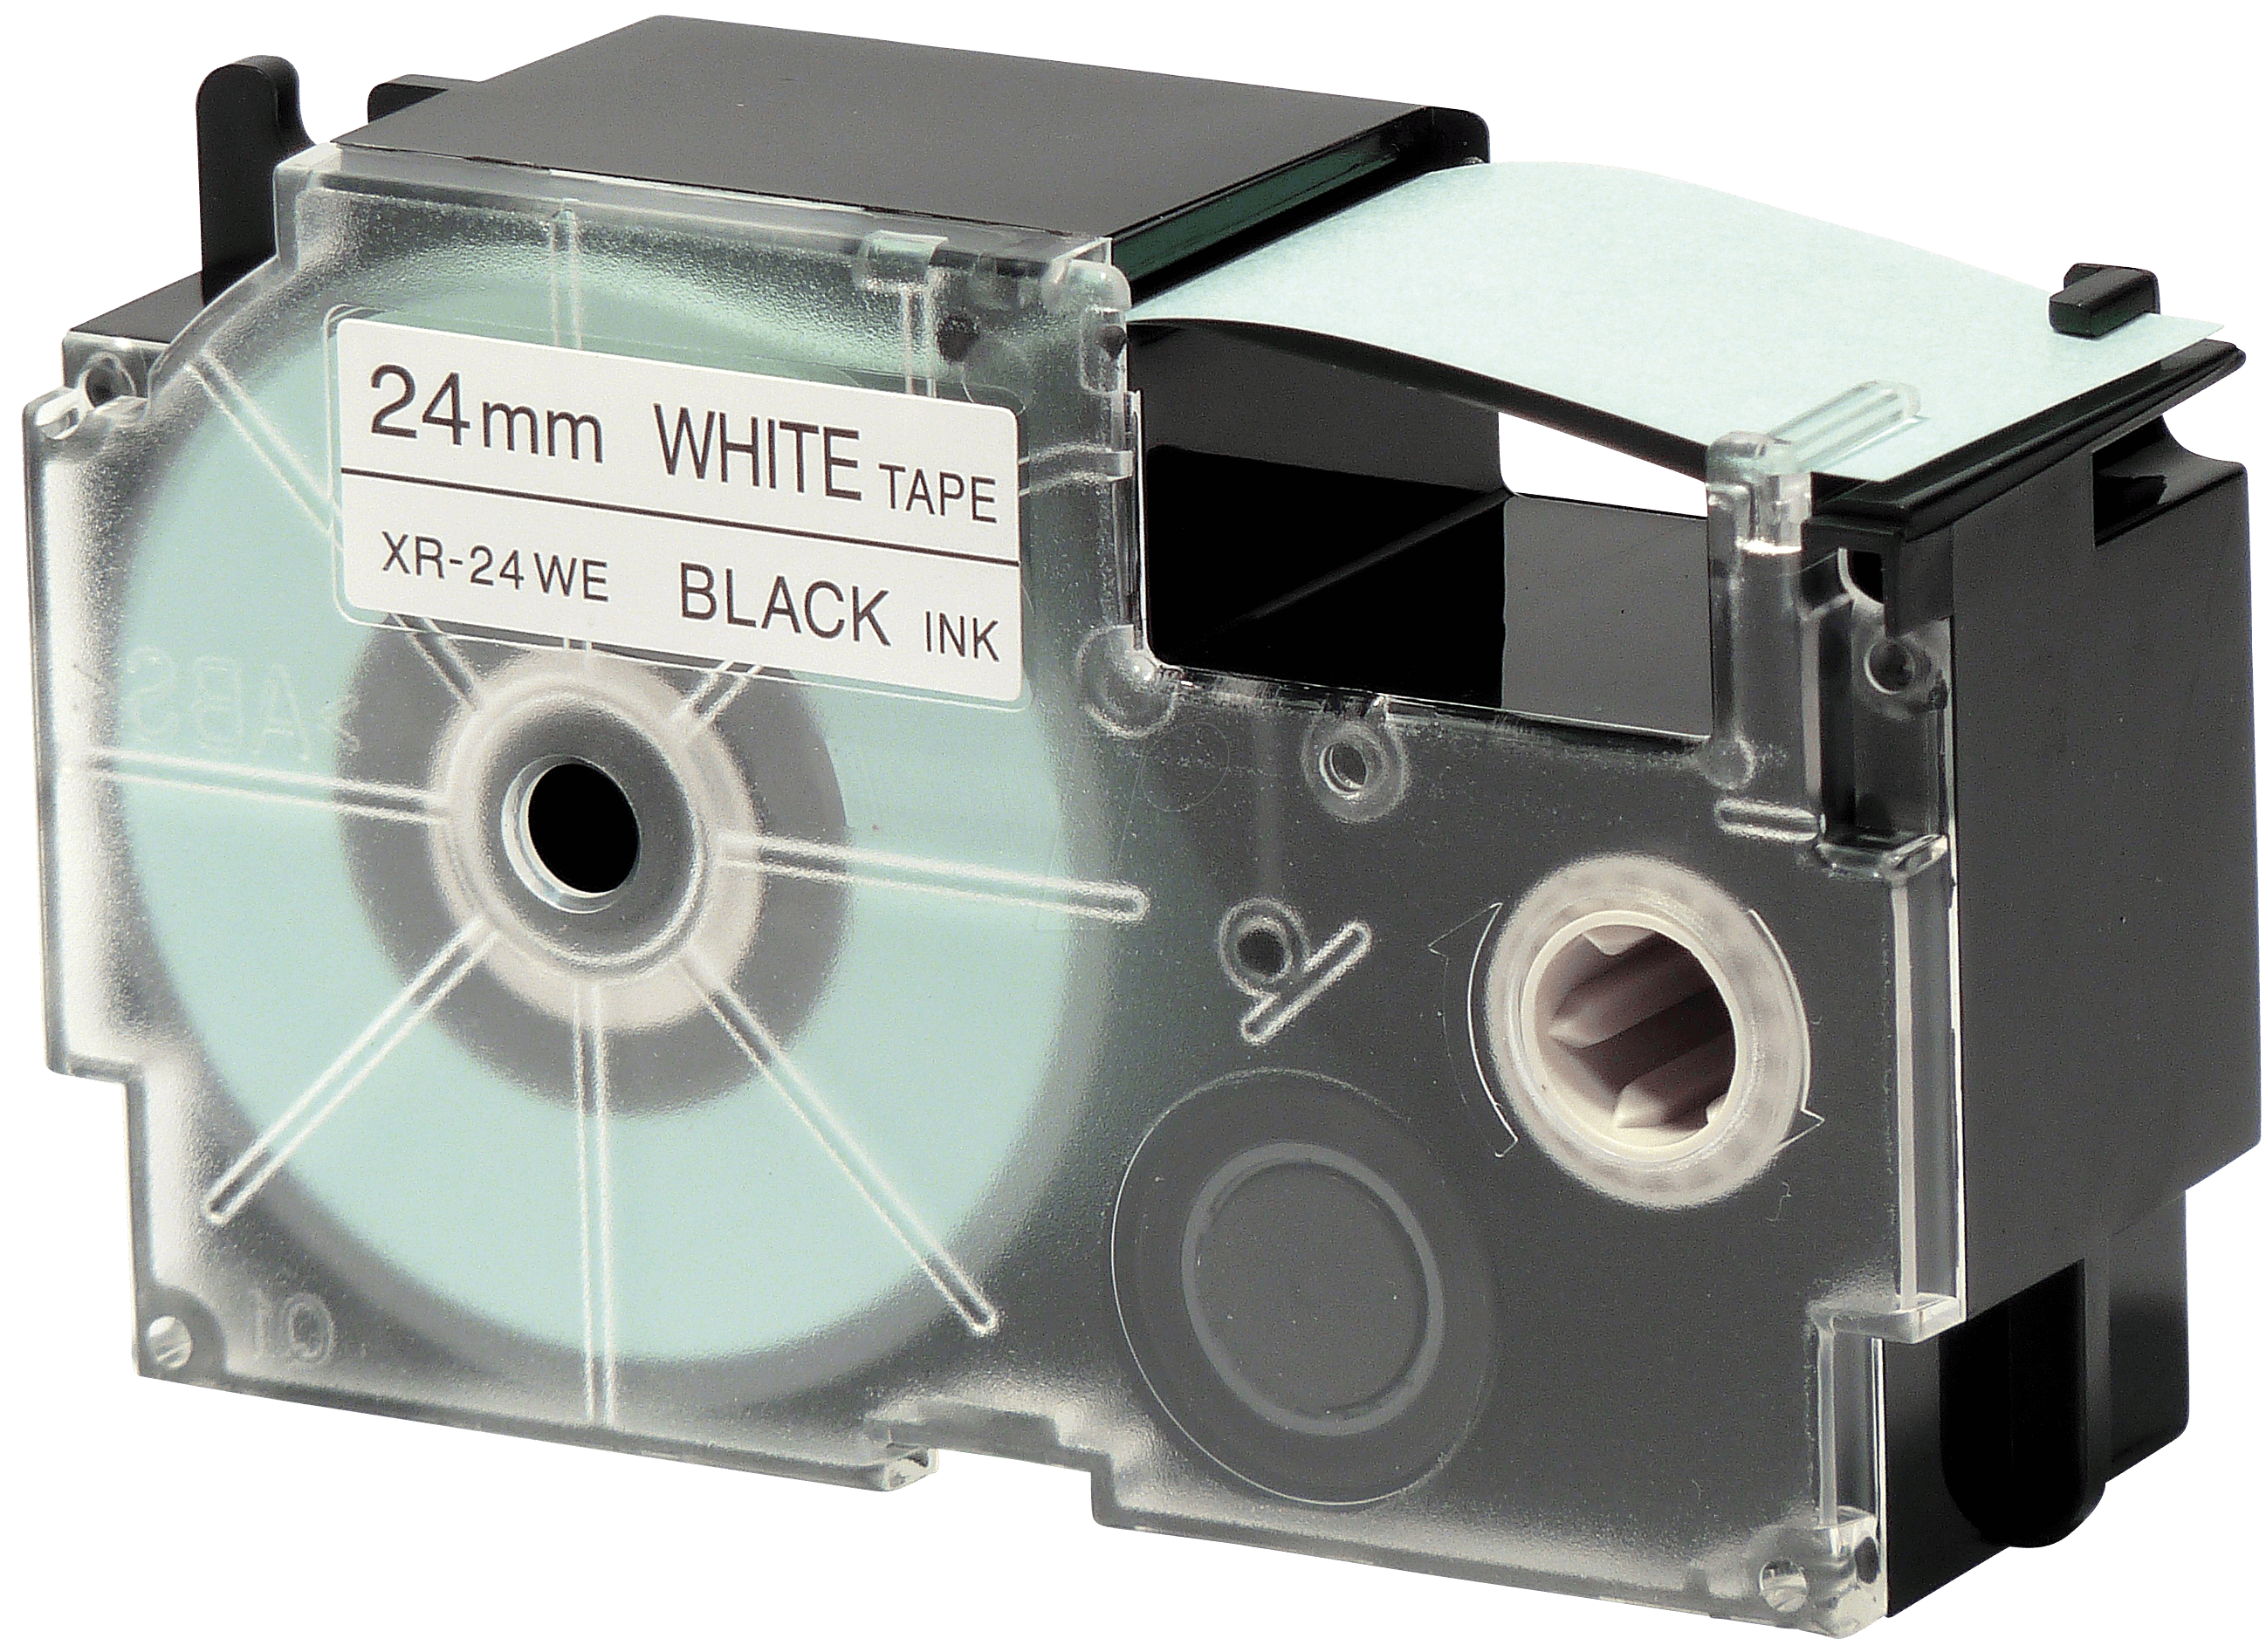 SKY 24mm x 8 meter Label Tape Cartridge for Casio  Label Printers